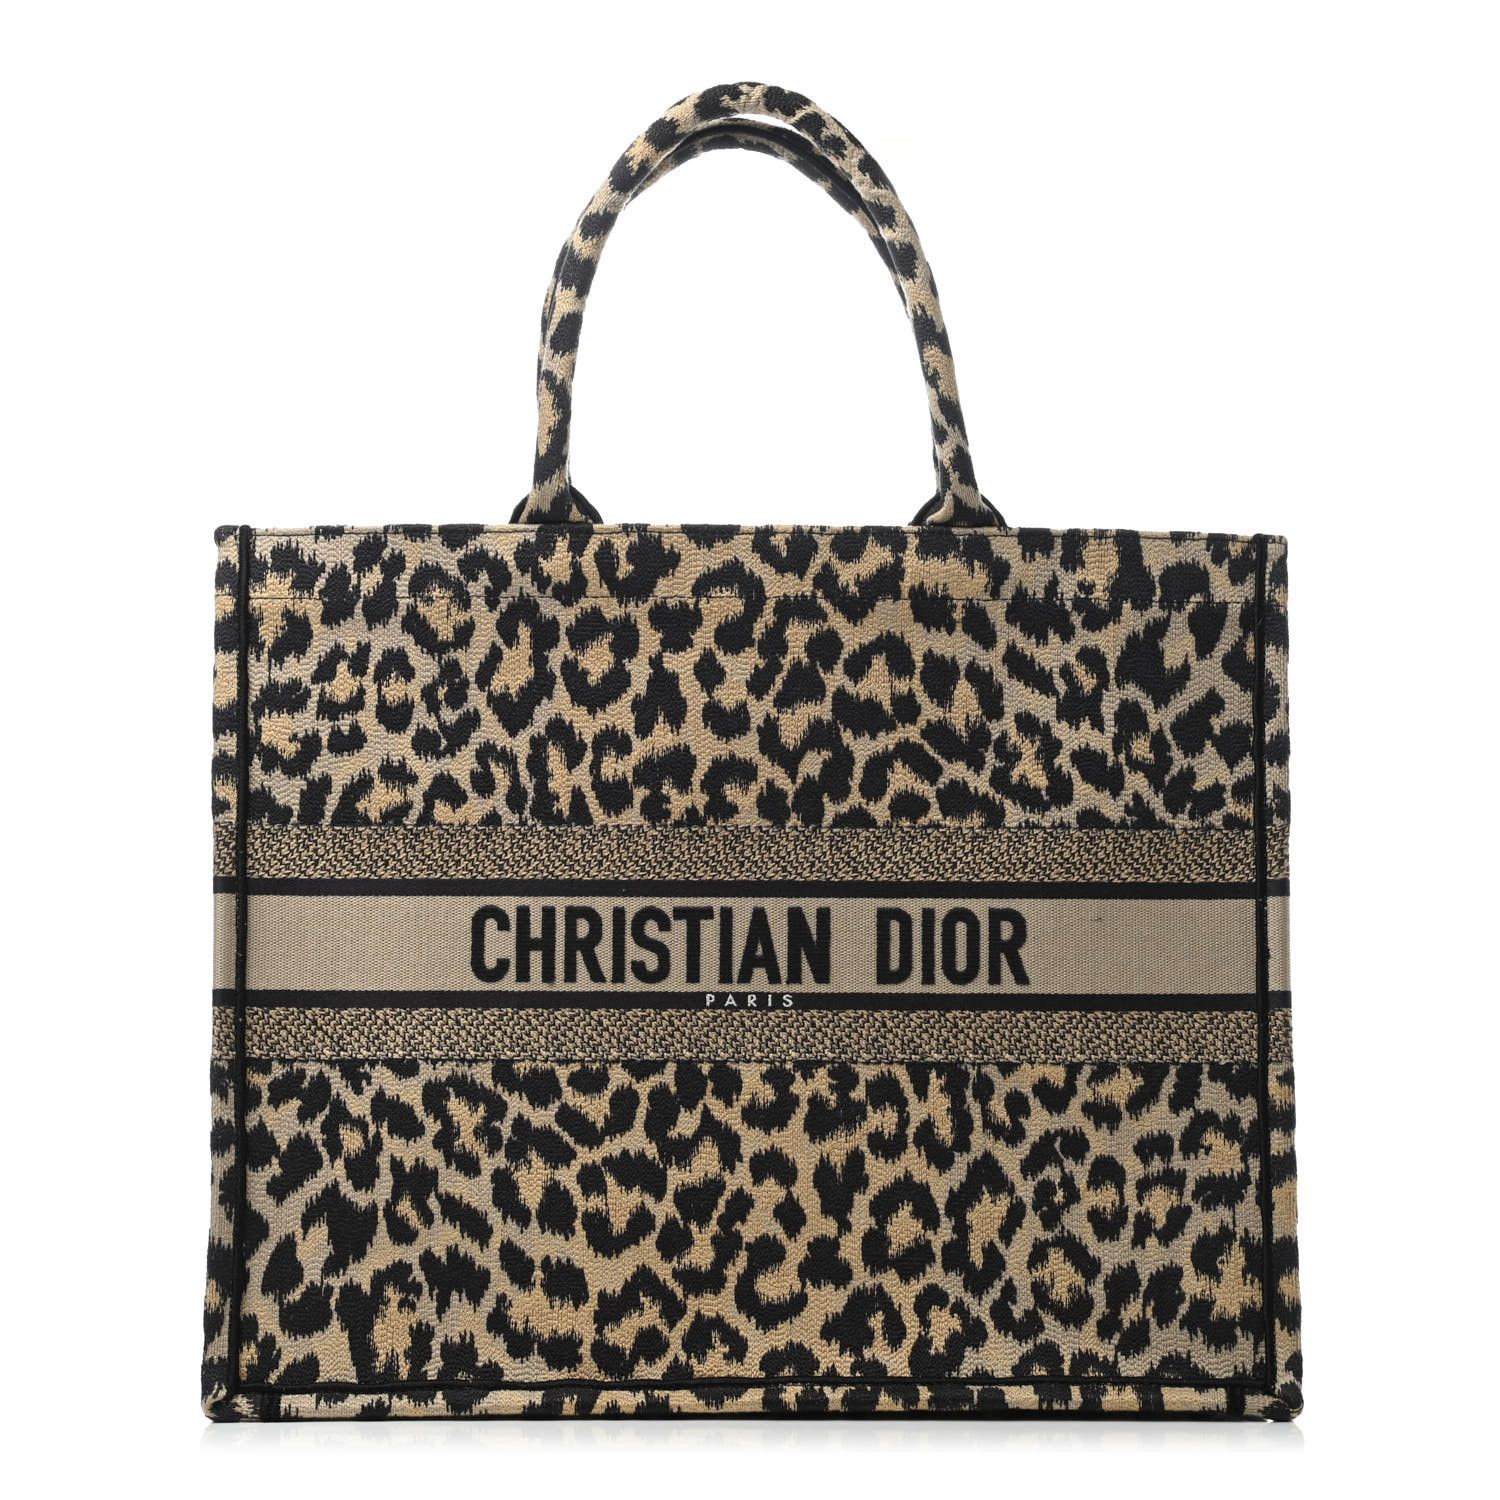 CHRISTIAN DIOR

Canvas Embroidered Leopard Book Tote Beige | Fashionphile